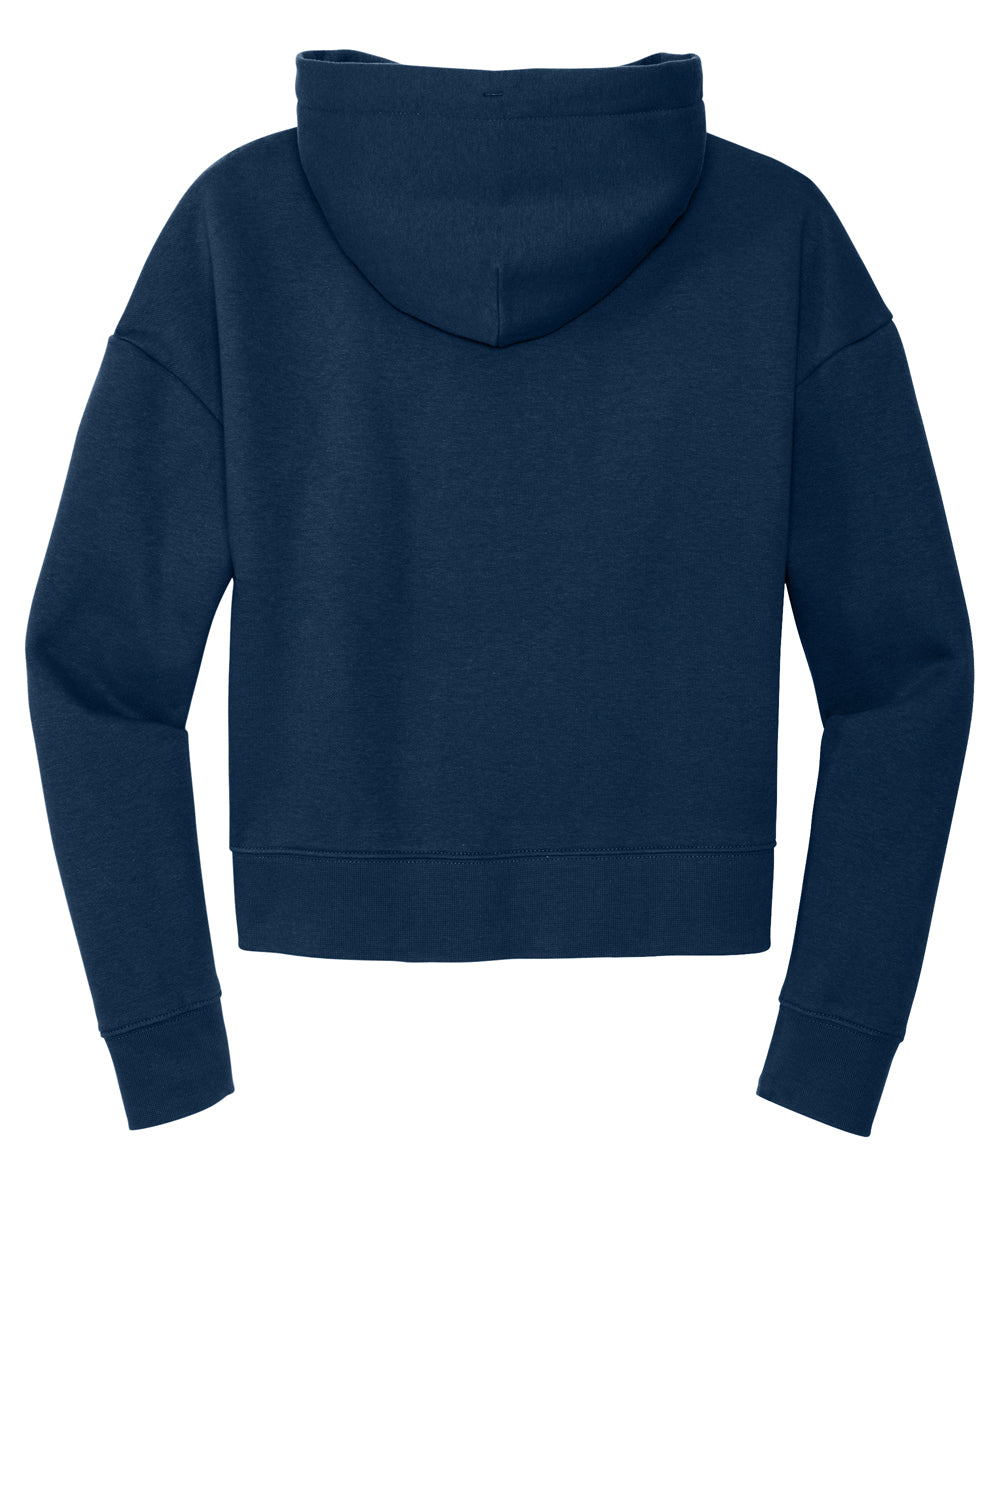 District DT6101 V.I.T. Fleece Hooded Sweatshirt Hoodie New Navy Blue Flat Back